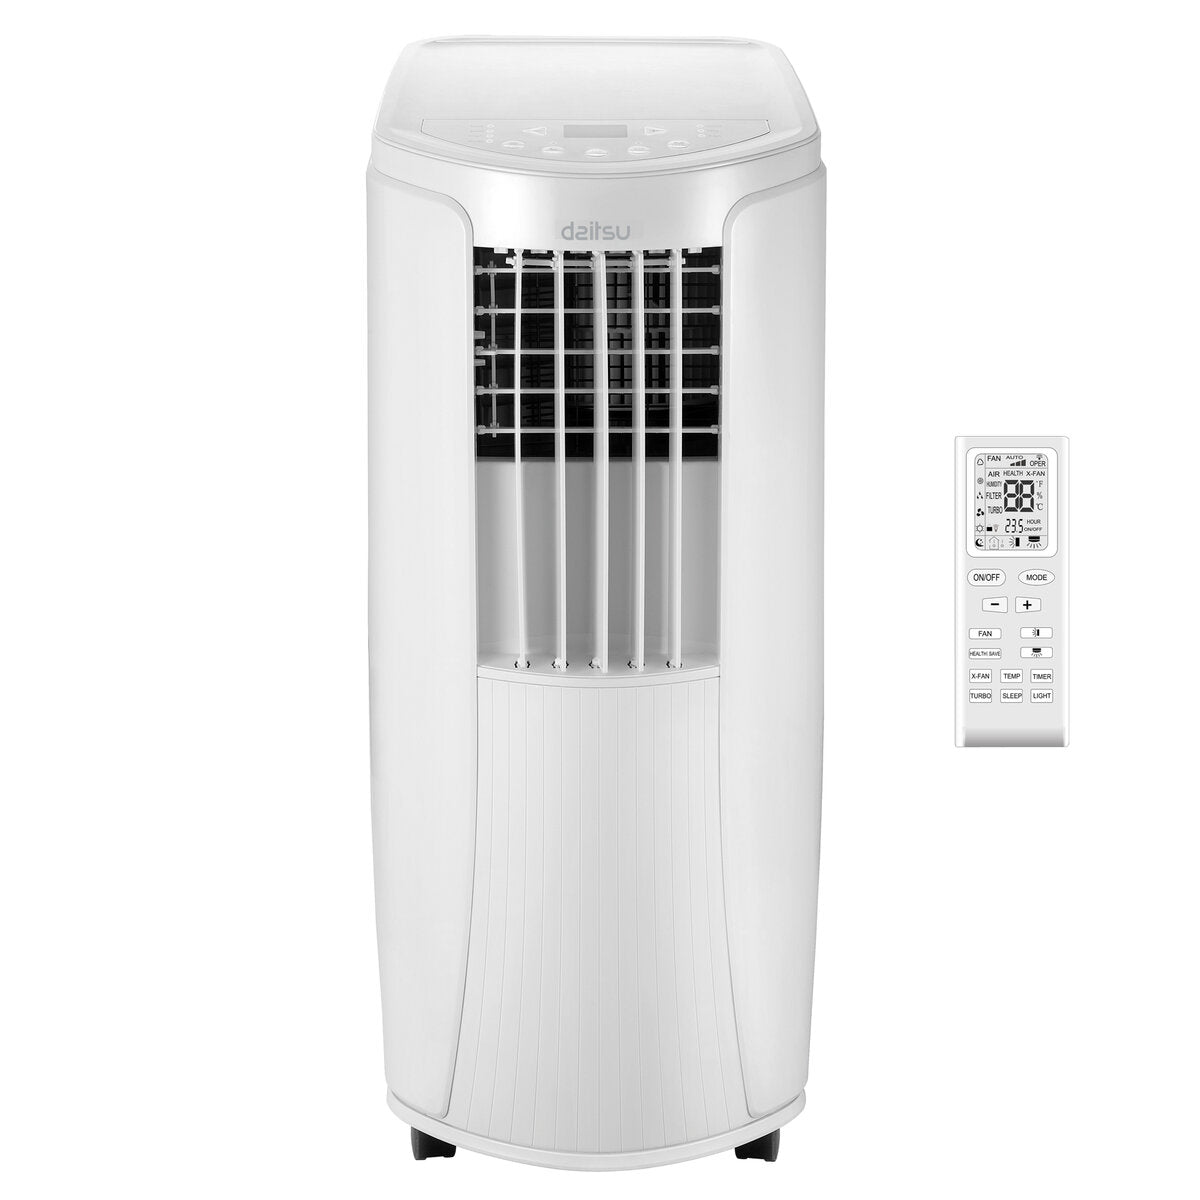 Daitsu portable air conditioner - Fujitsu Group - mod. APD-12X F / C 12000 BTU cooling / heating class A / A +